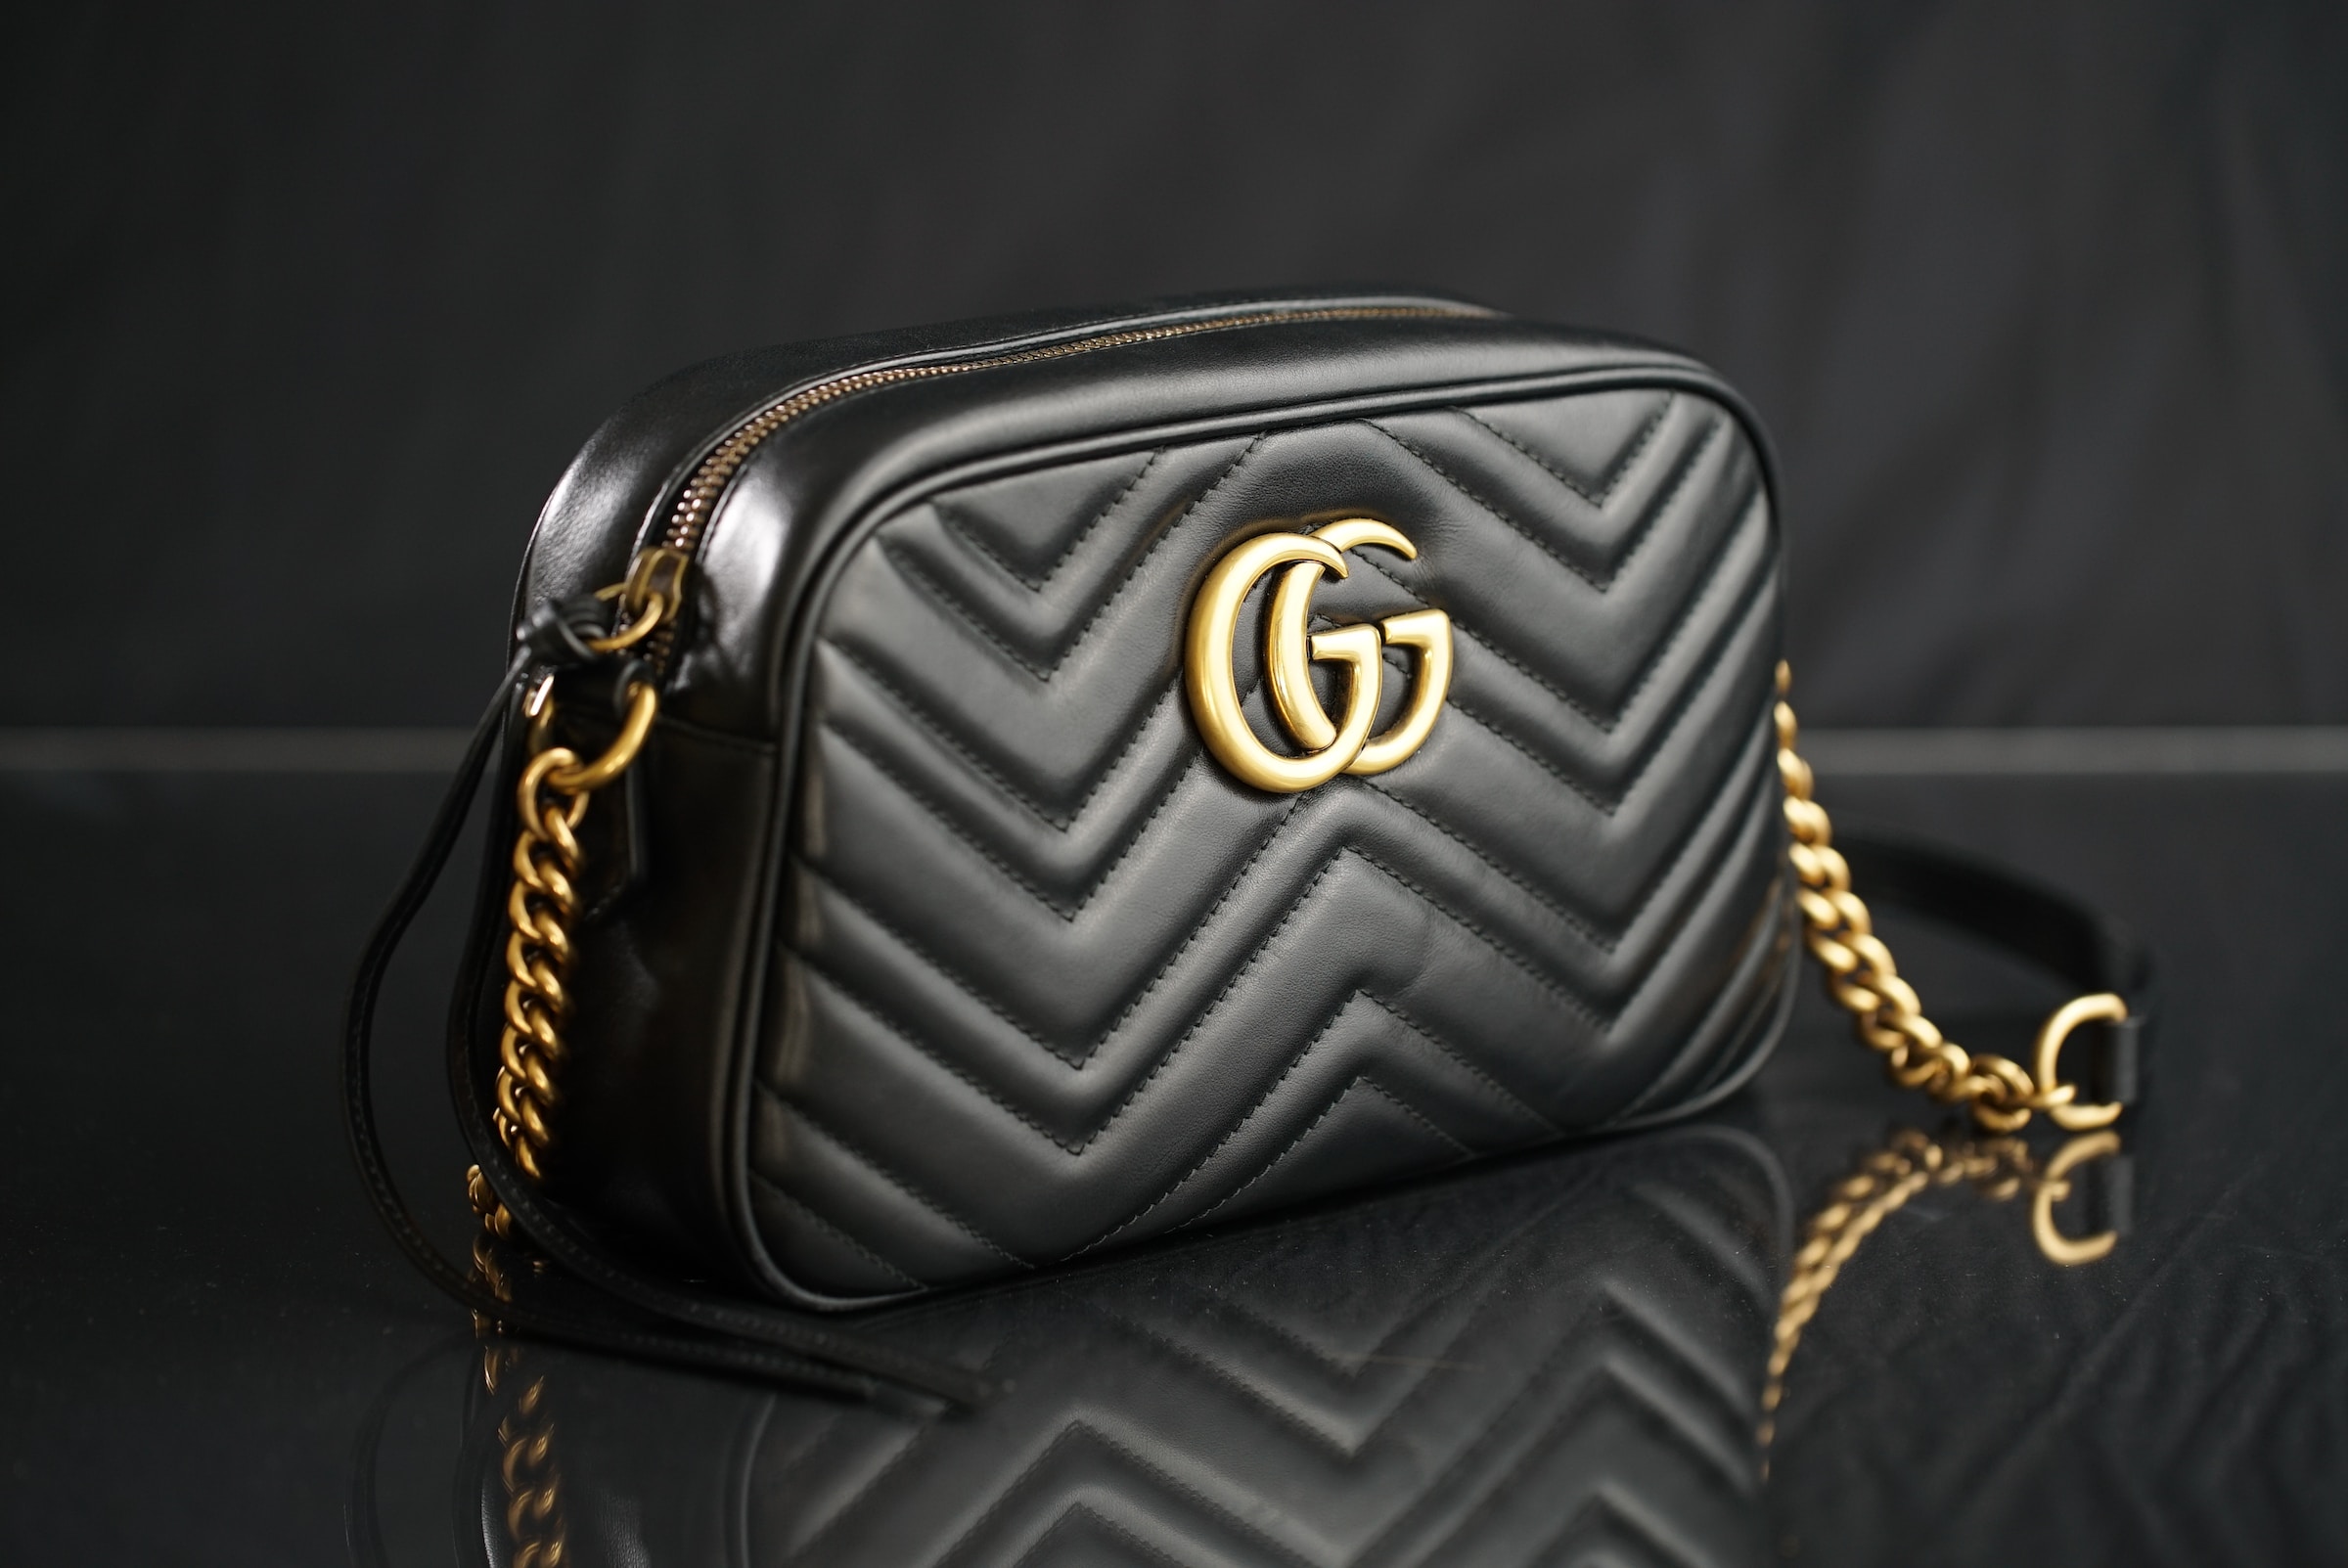 Black Gucci handbag | Source: Unsplash